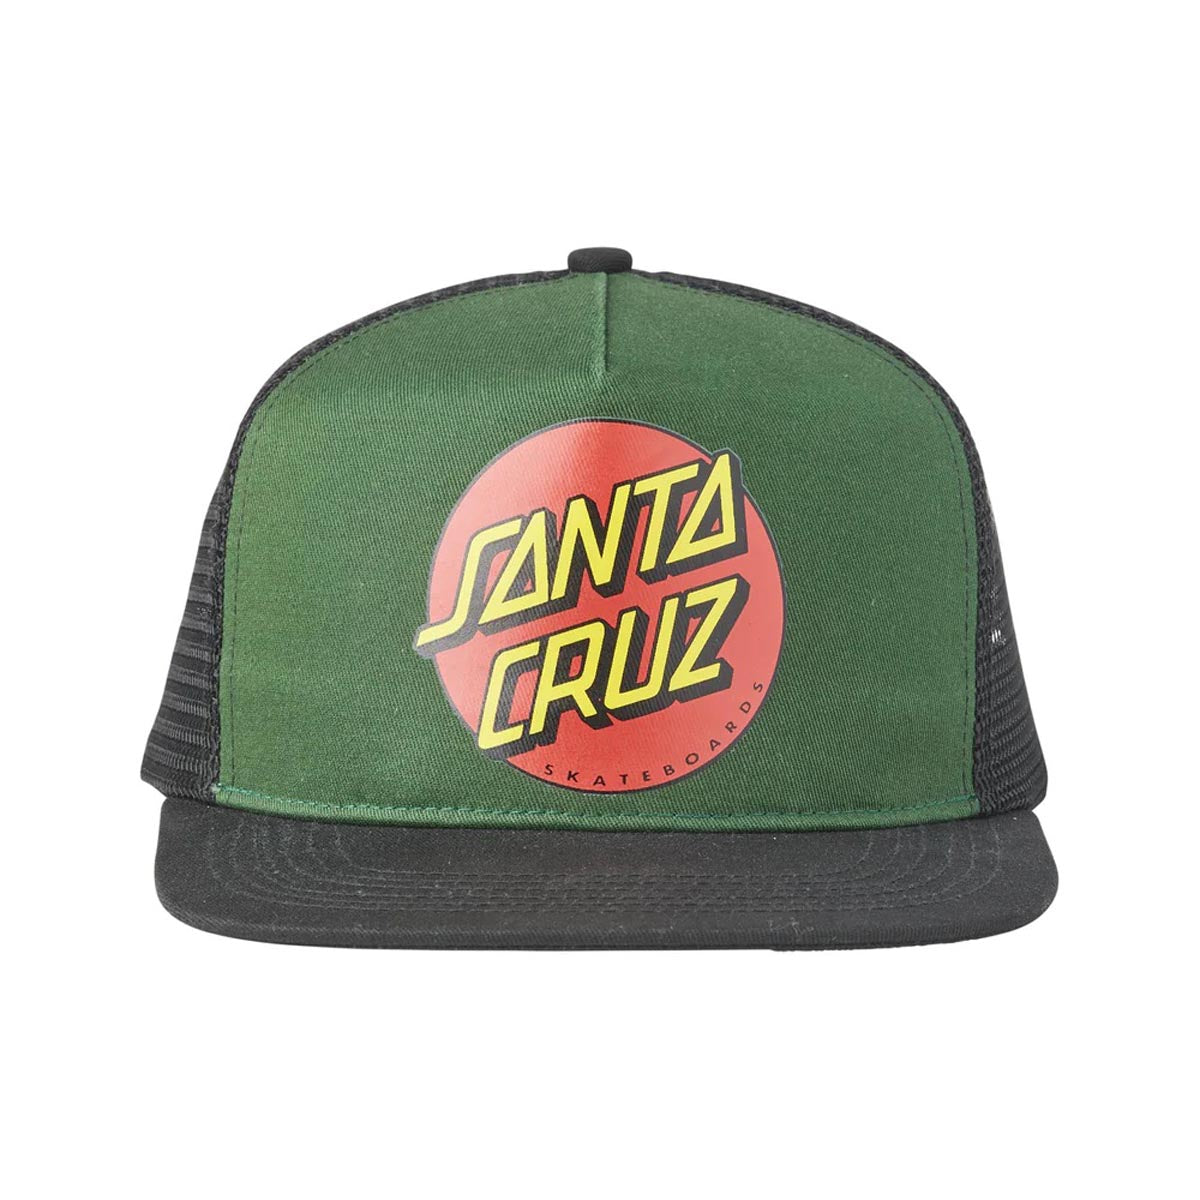 Santa Cruz Classic Dot Mesh Trucker Hat - Dark Green/Black image 3